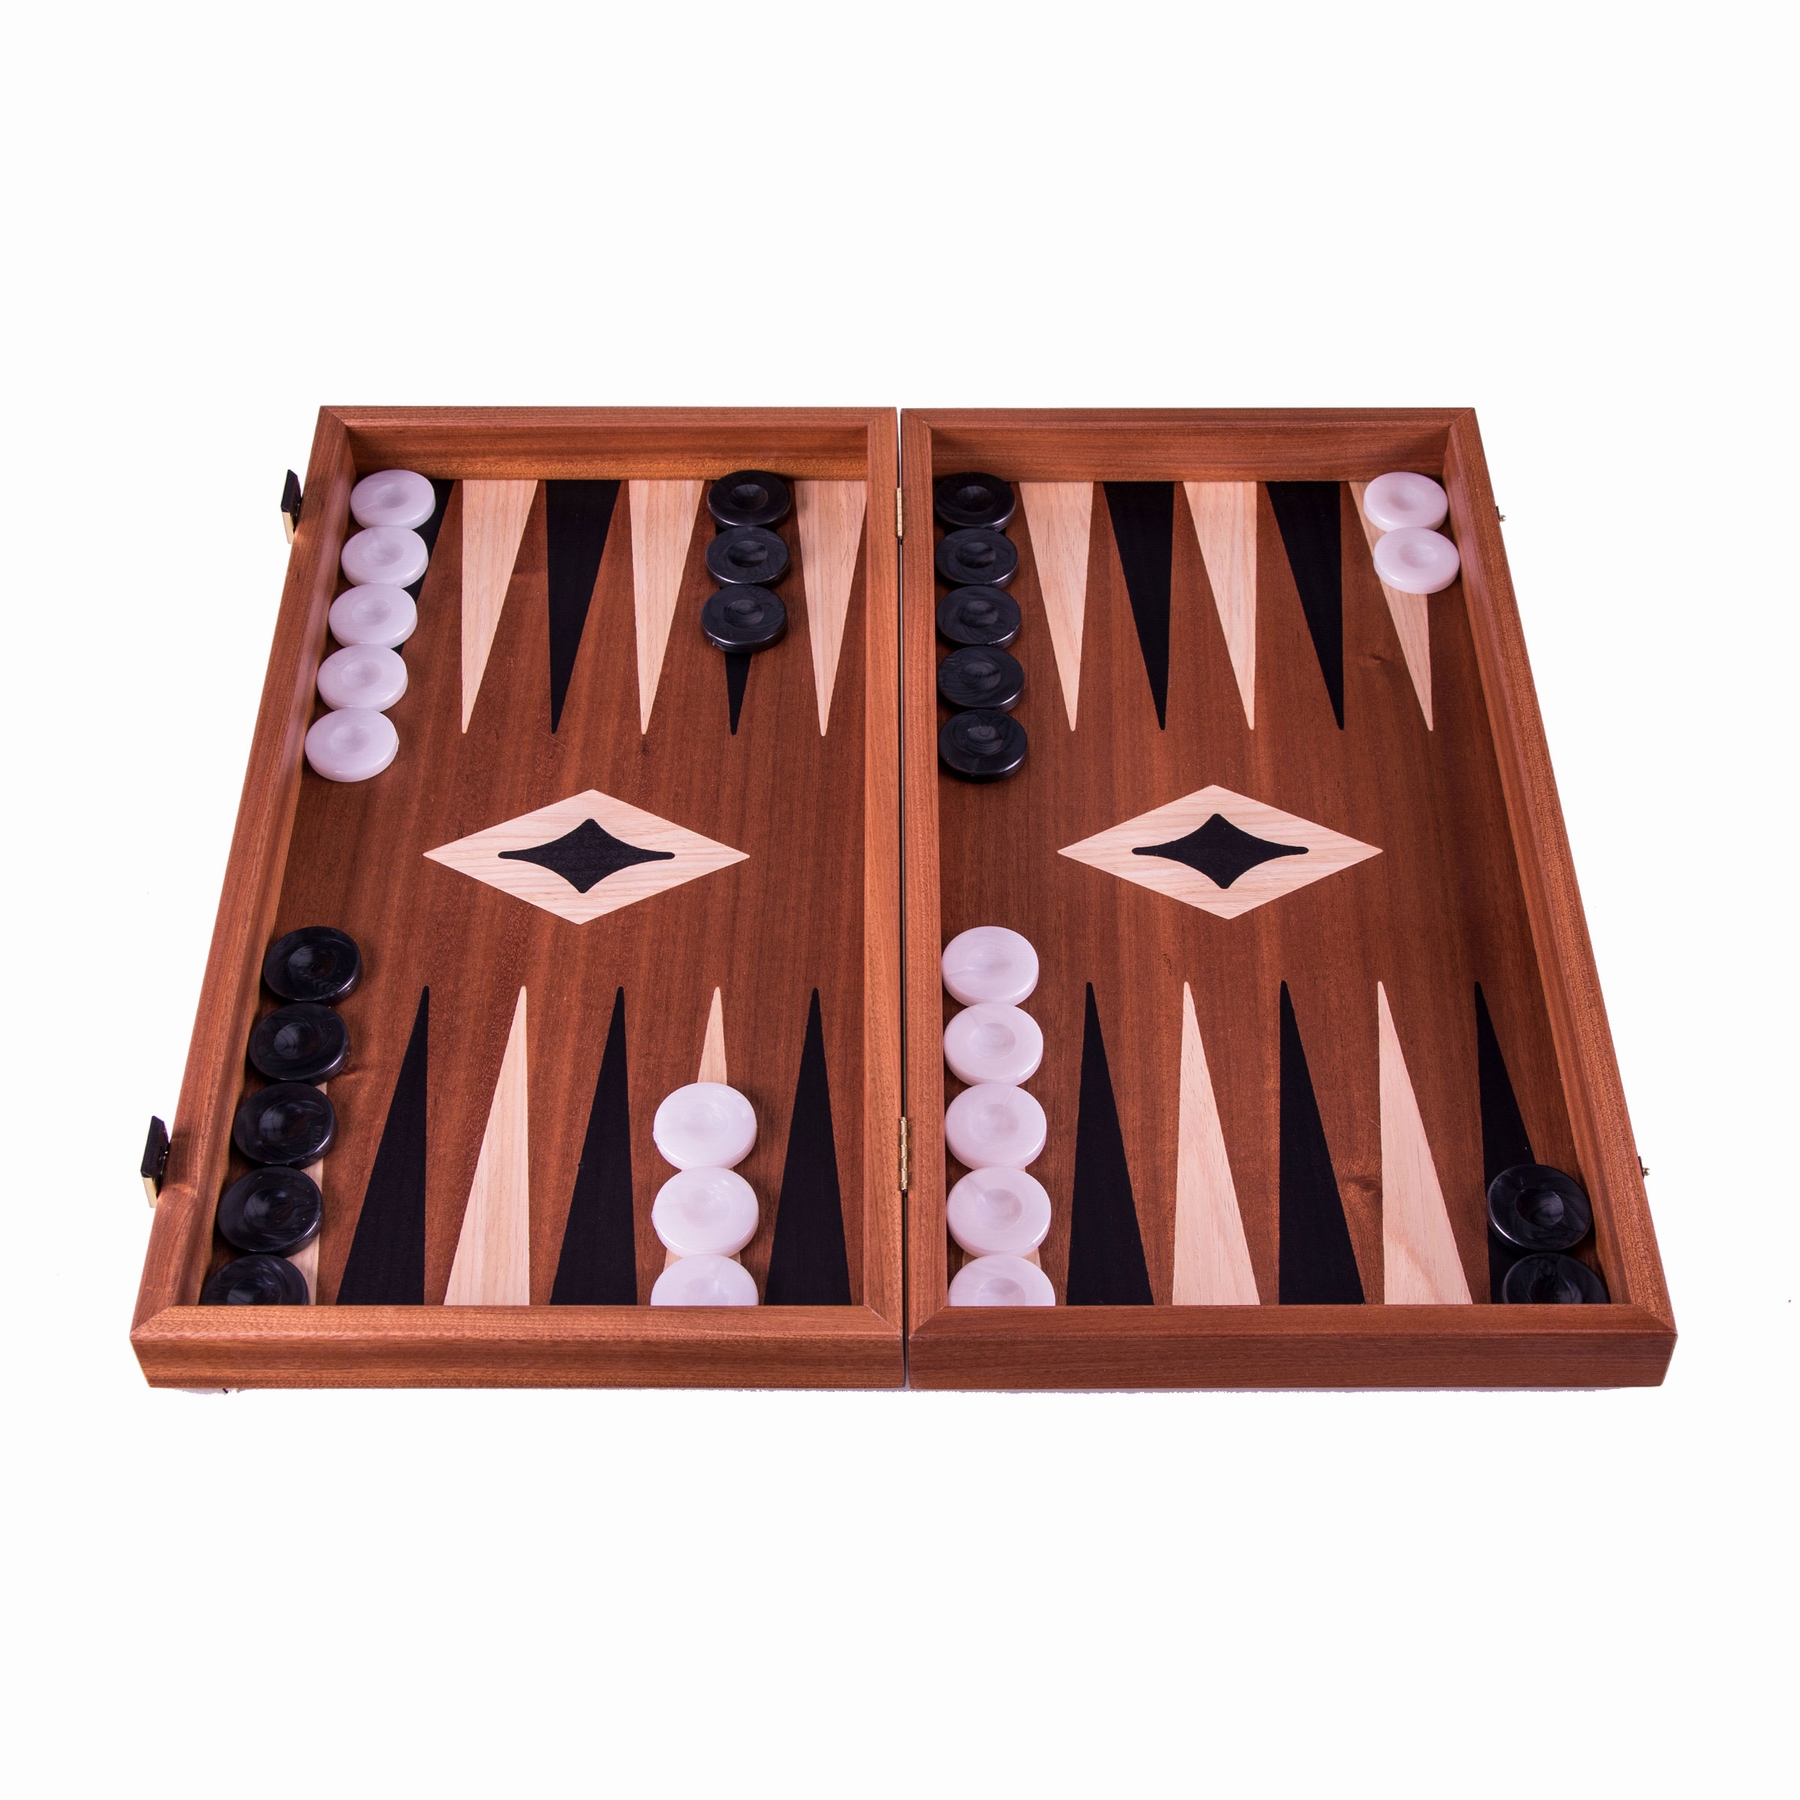 Echecs backgammon 48cm acaj hc